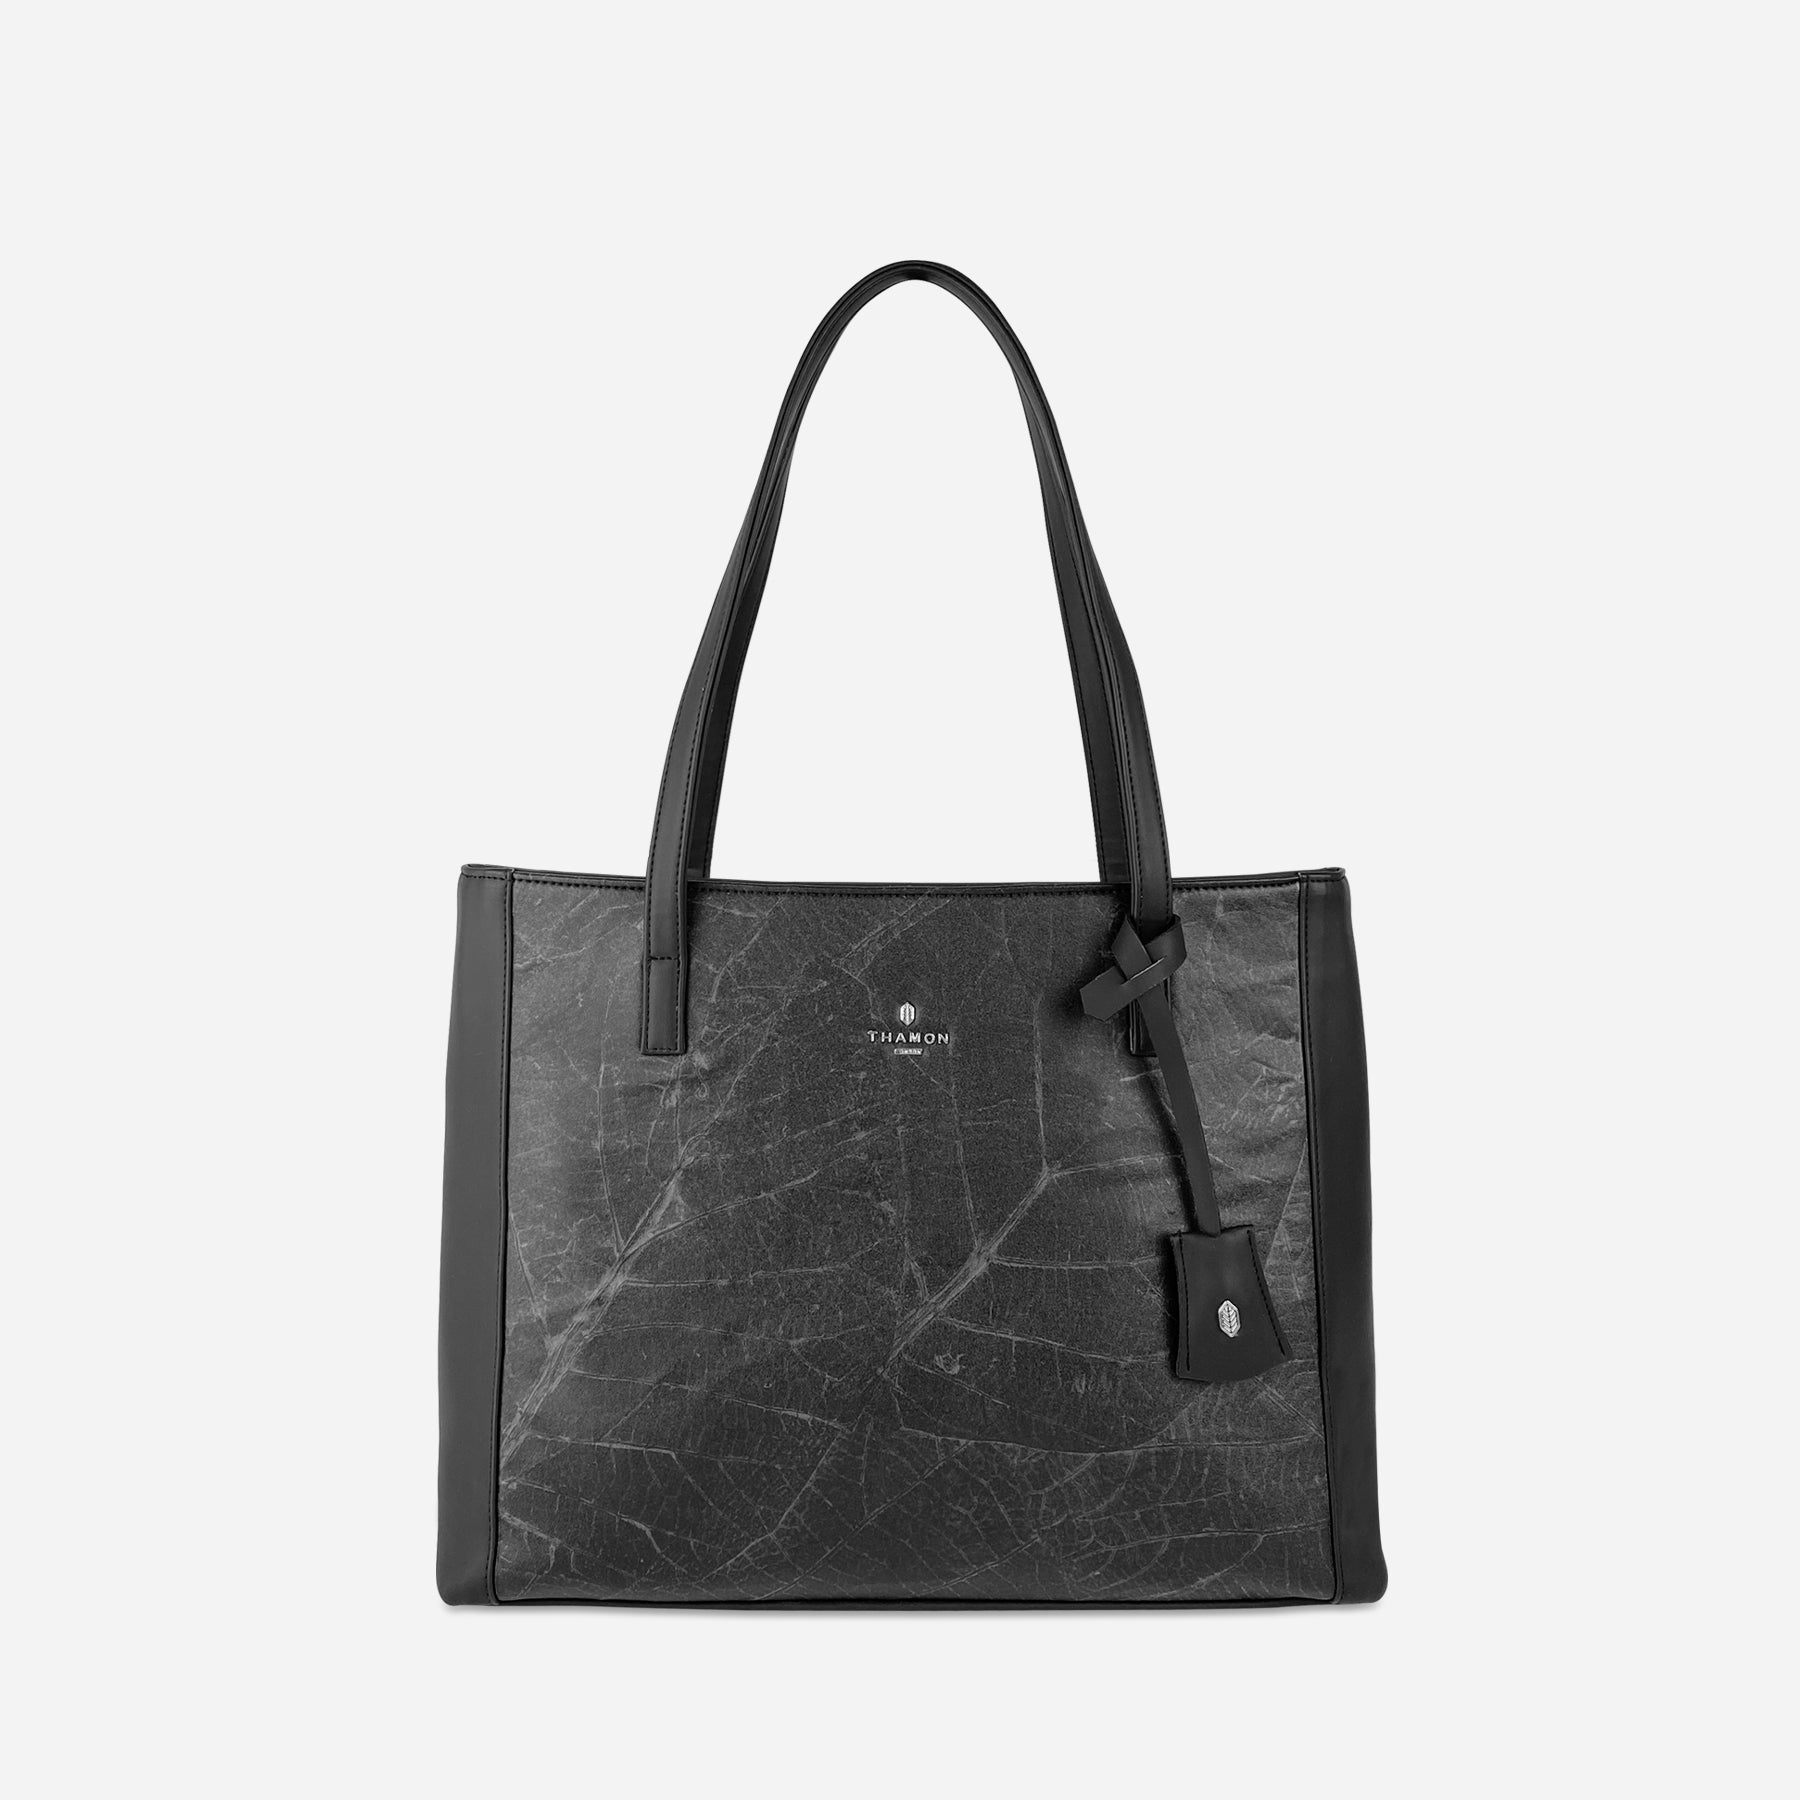 Le Pliage Original M Tote bag Black - Recycled canvas (L2605089001